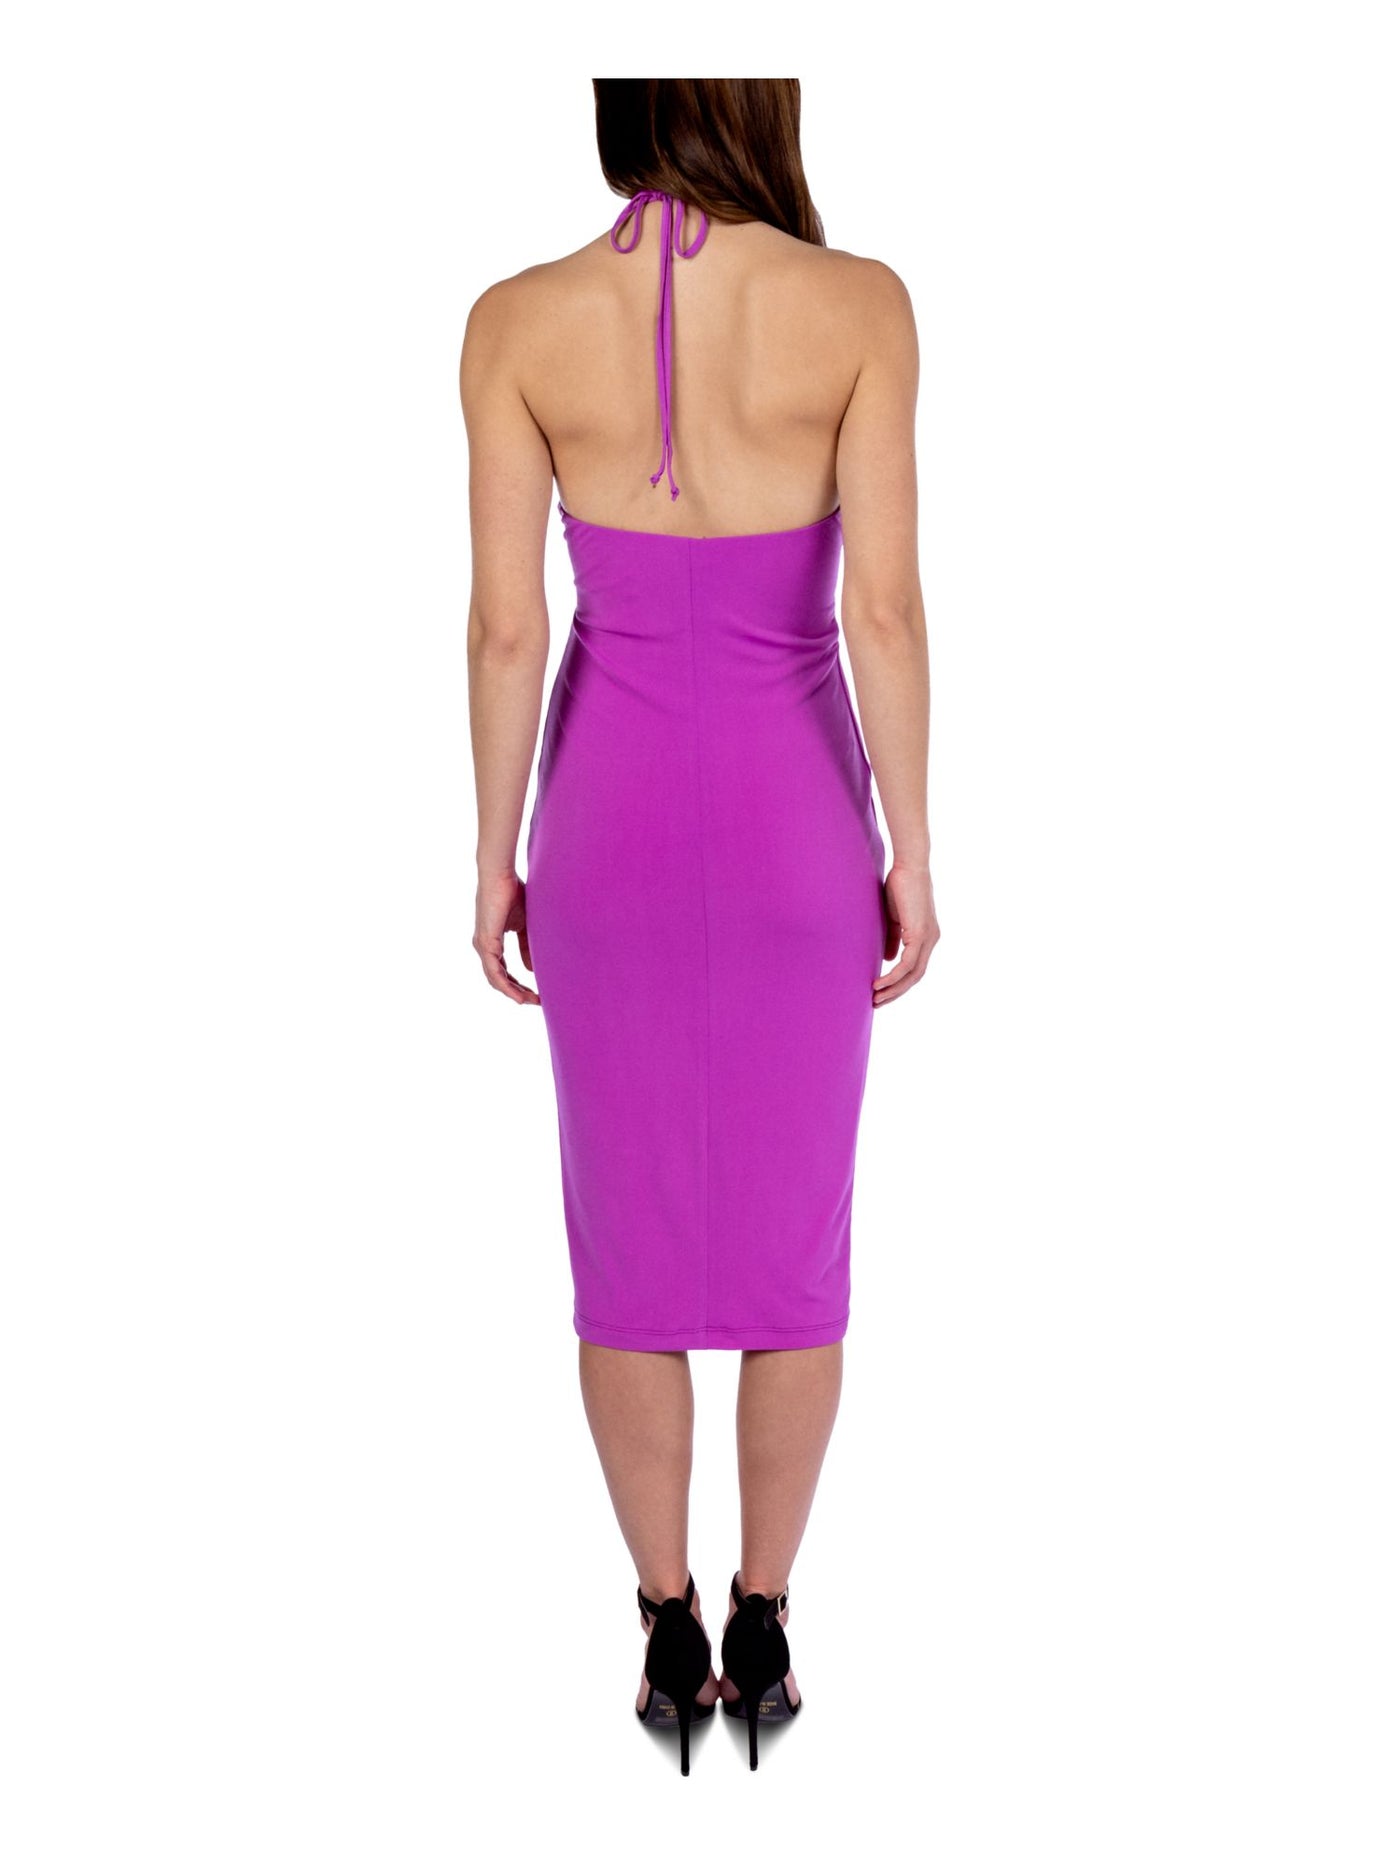 B DARLIN Womens Purple Cut Out Tie Lined Open Back Sleeveless Halter Midi Party Sheath Dress Juniors 9\10